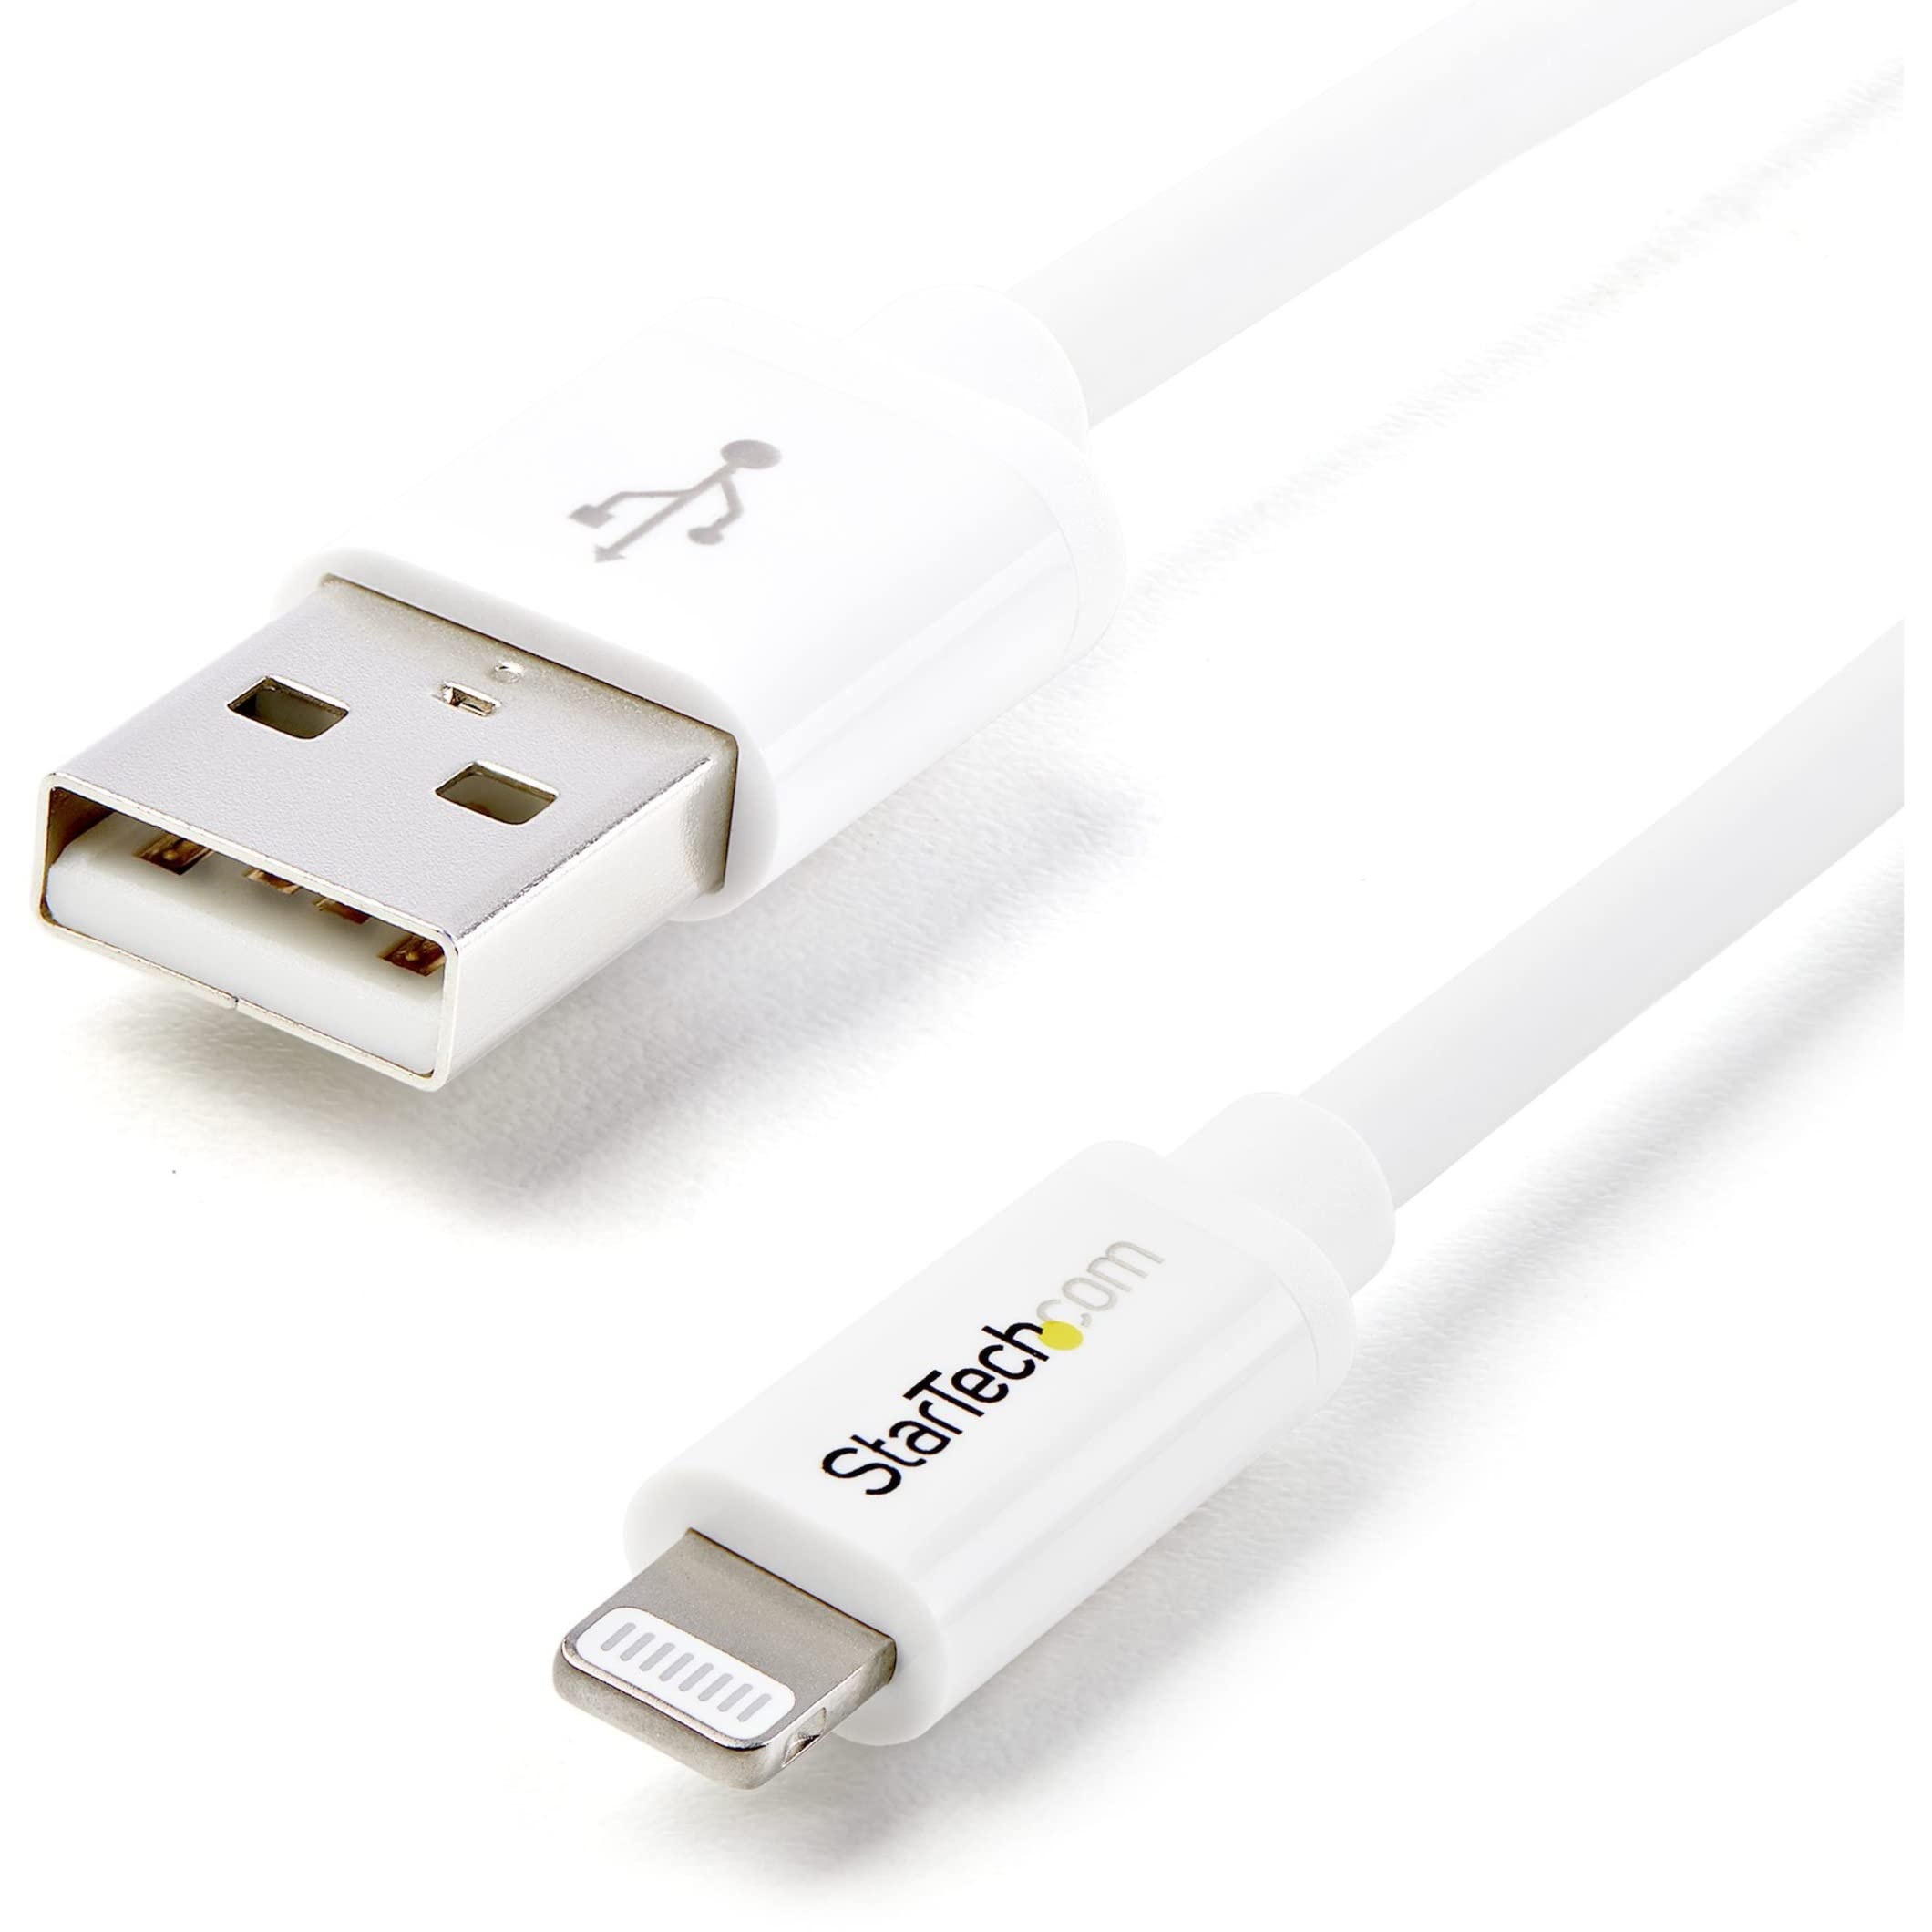 StarTech.com 2m Apple® 8 Pin Lightning Connector auf USB Kabel - Weiß - USB Kabel für iPhone / iPod / iPad - Ladekabel / Datenkabel